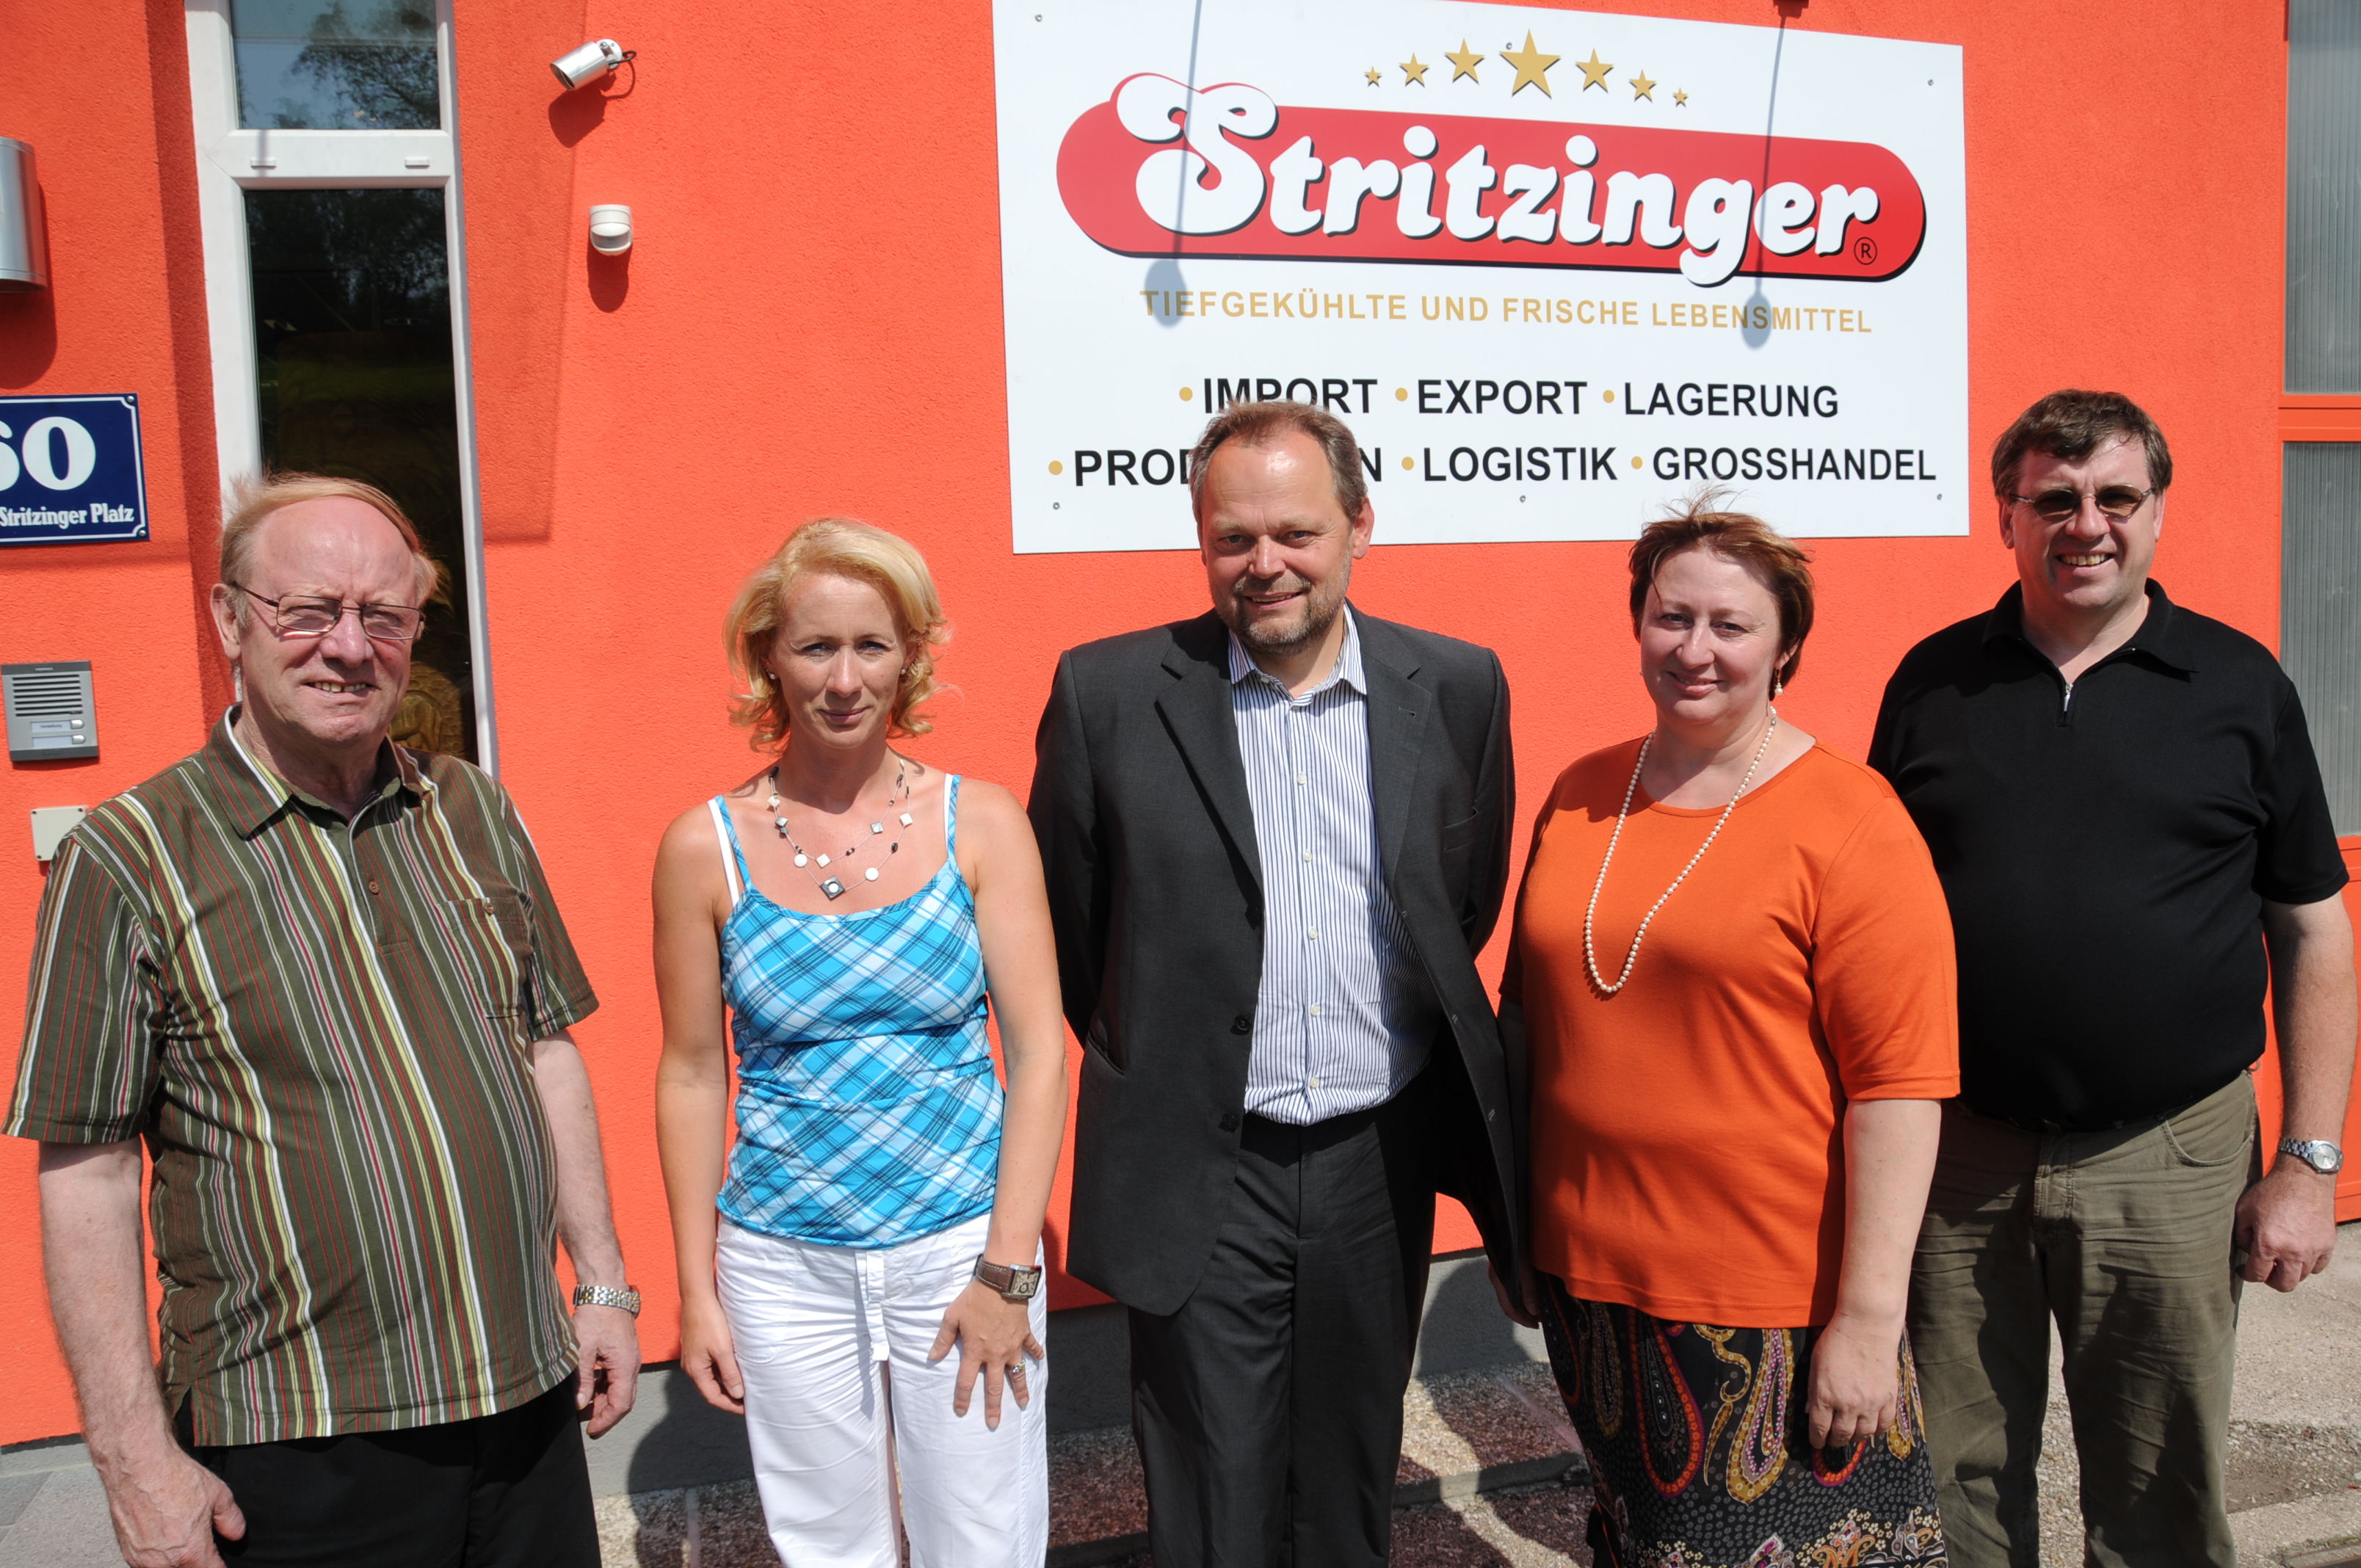 Stritzinger